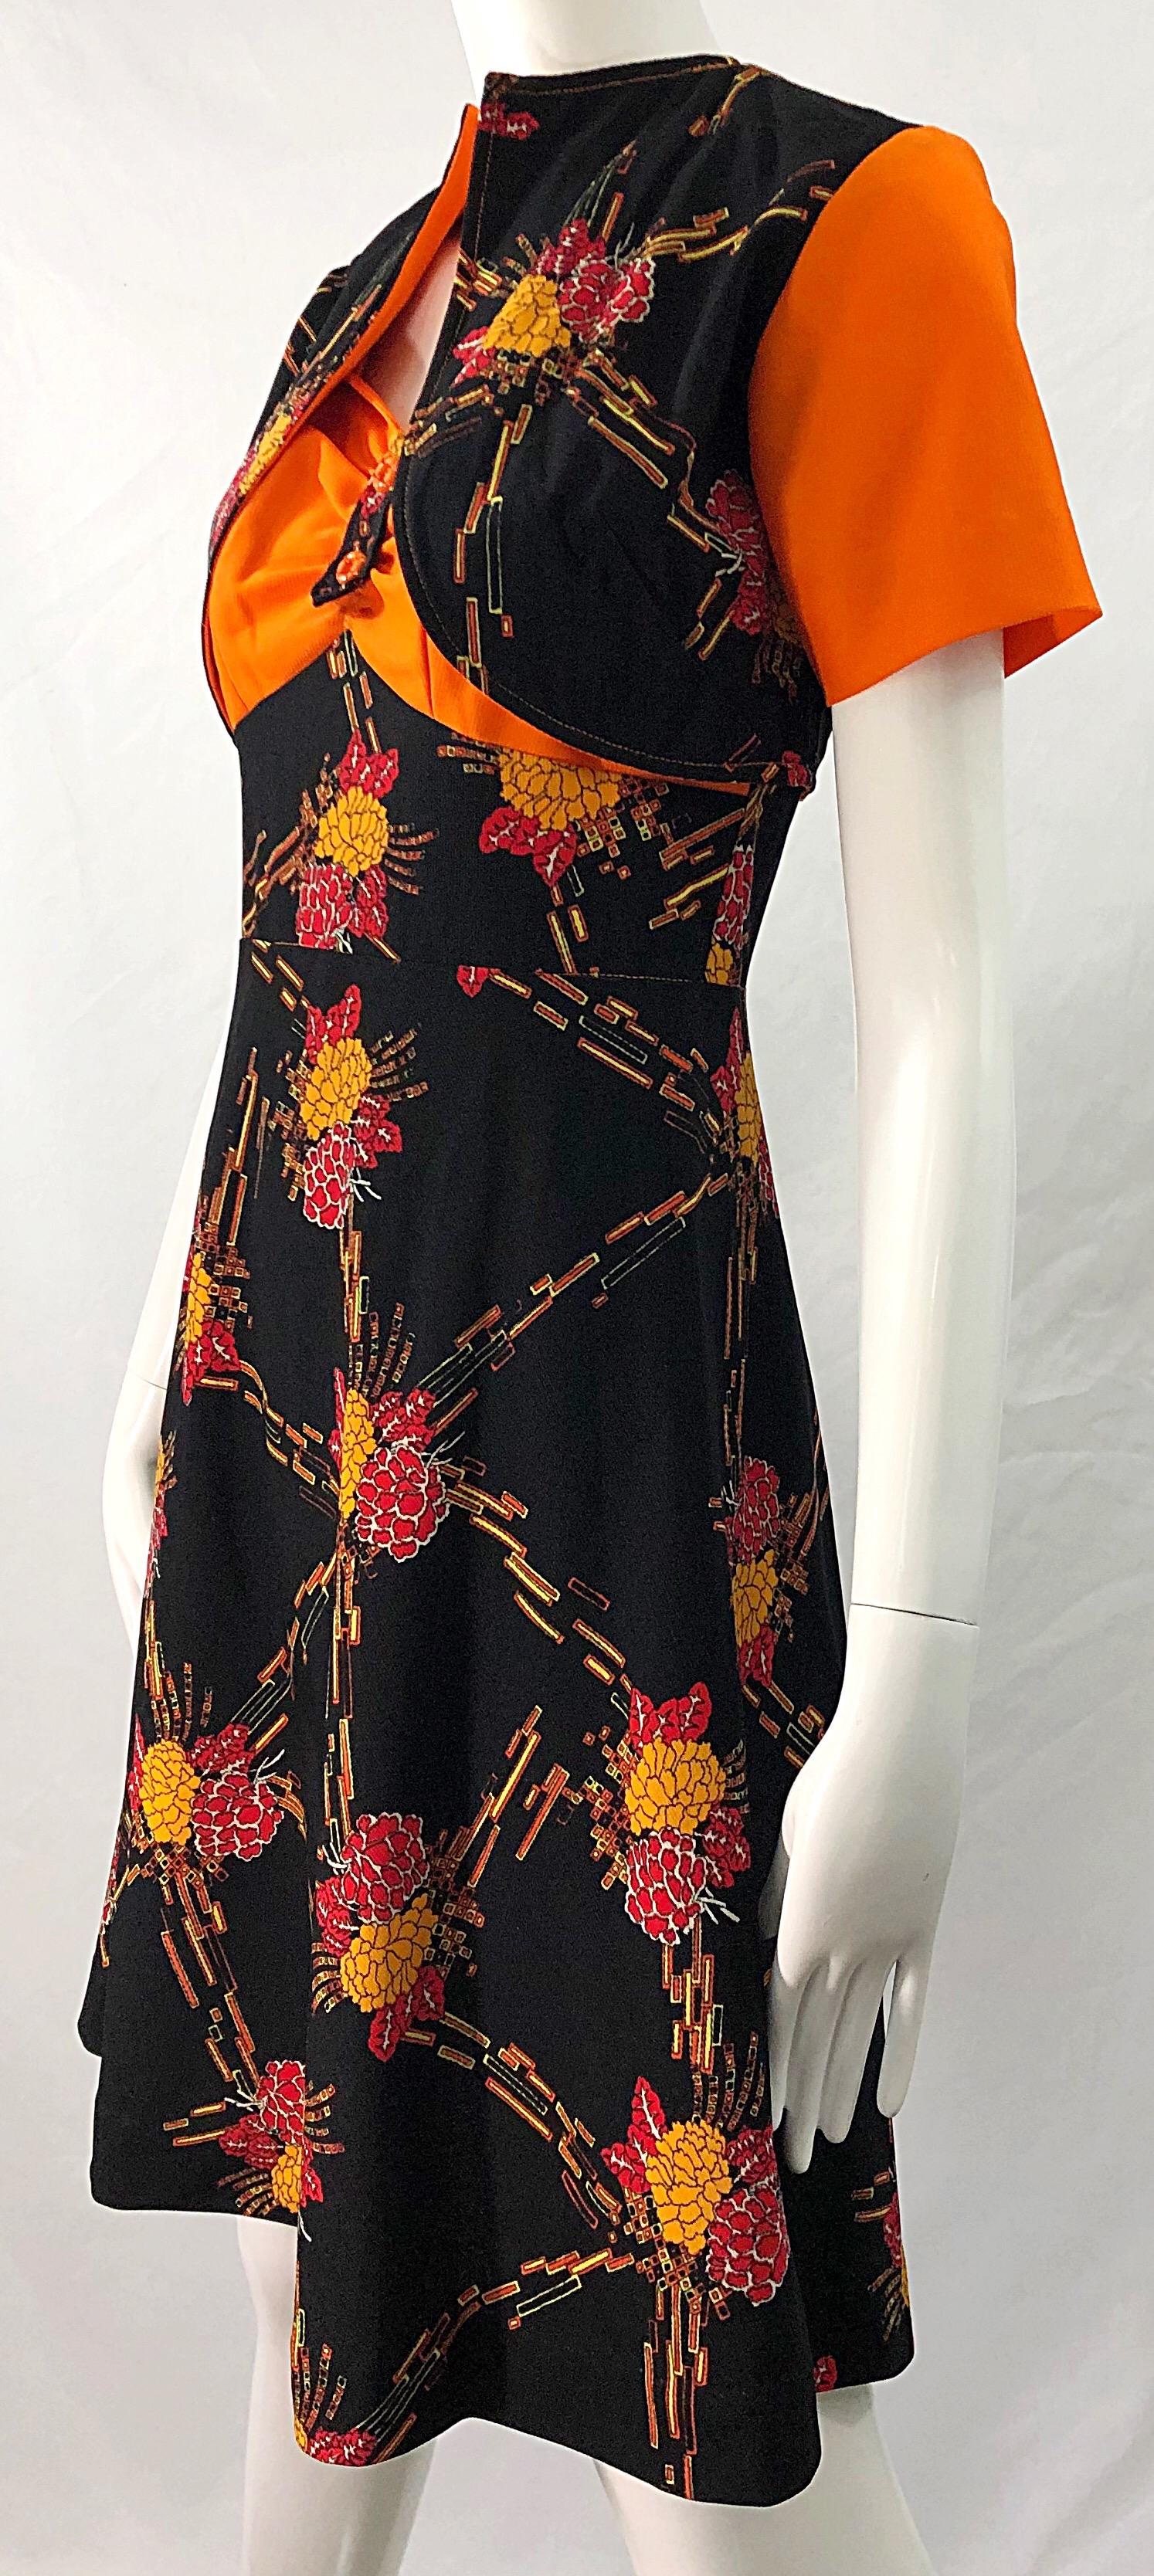 1970s Autumnal Digital Floral Print Knit Vintage 70s A Line Dress + Bolero Top For Sale 9